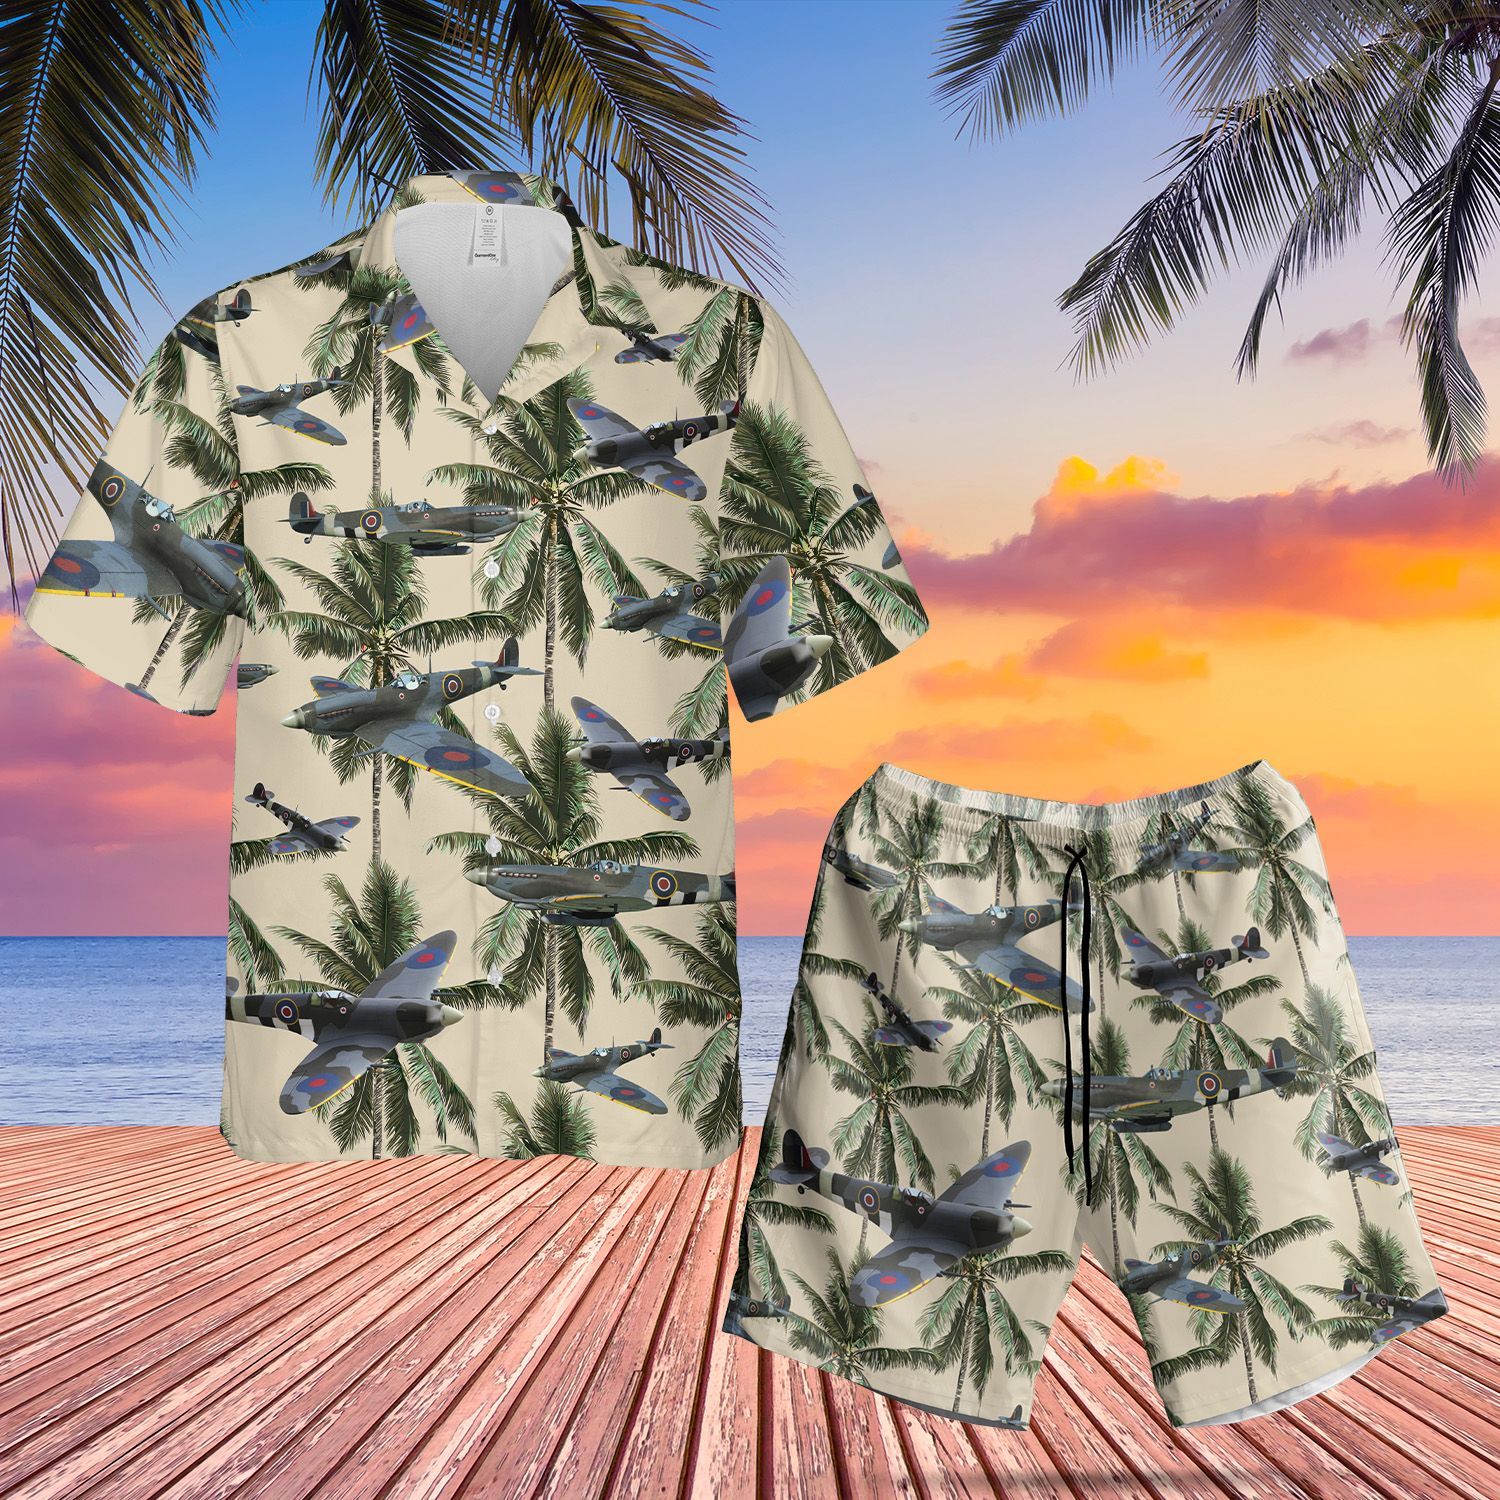 Enjoy your summer with top cool hawaiian shirt below 13